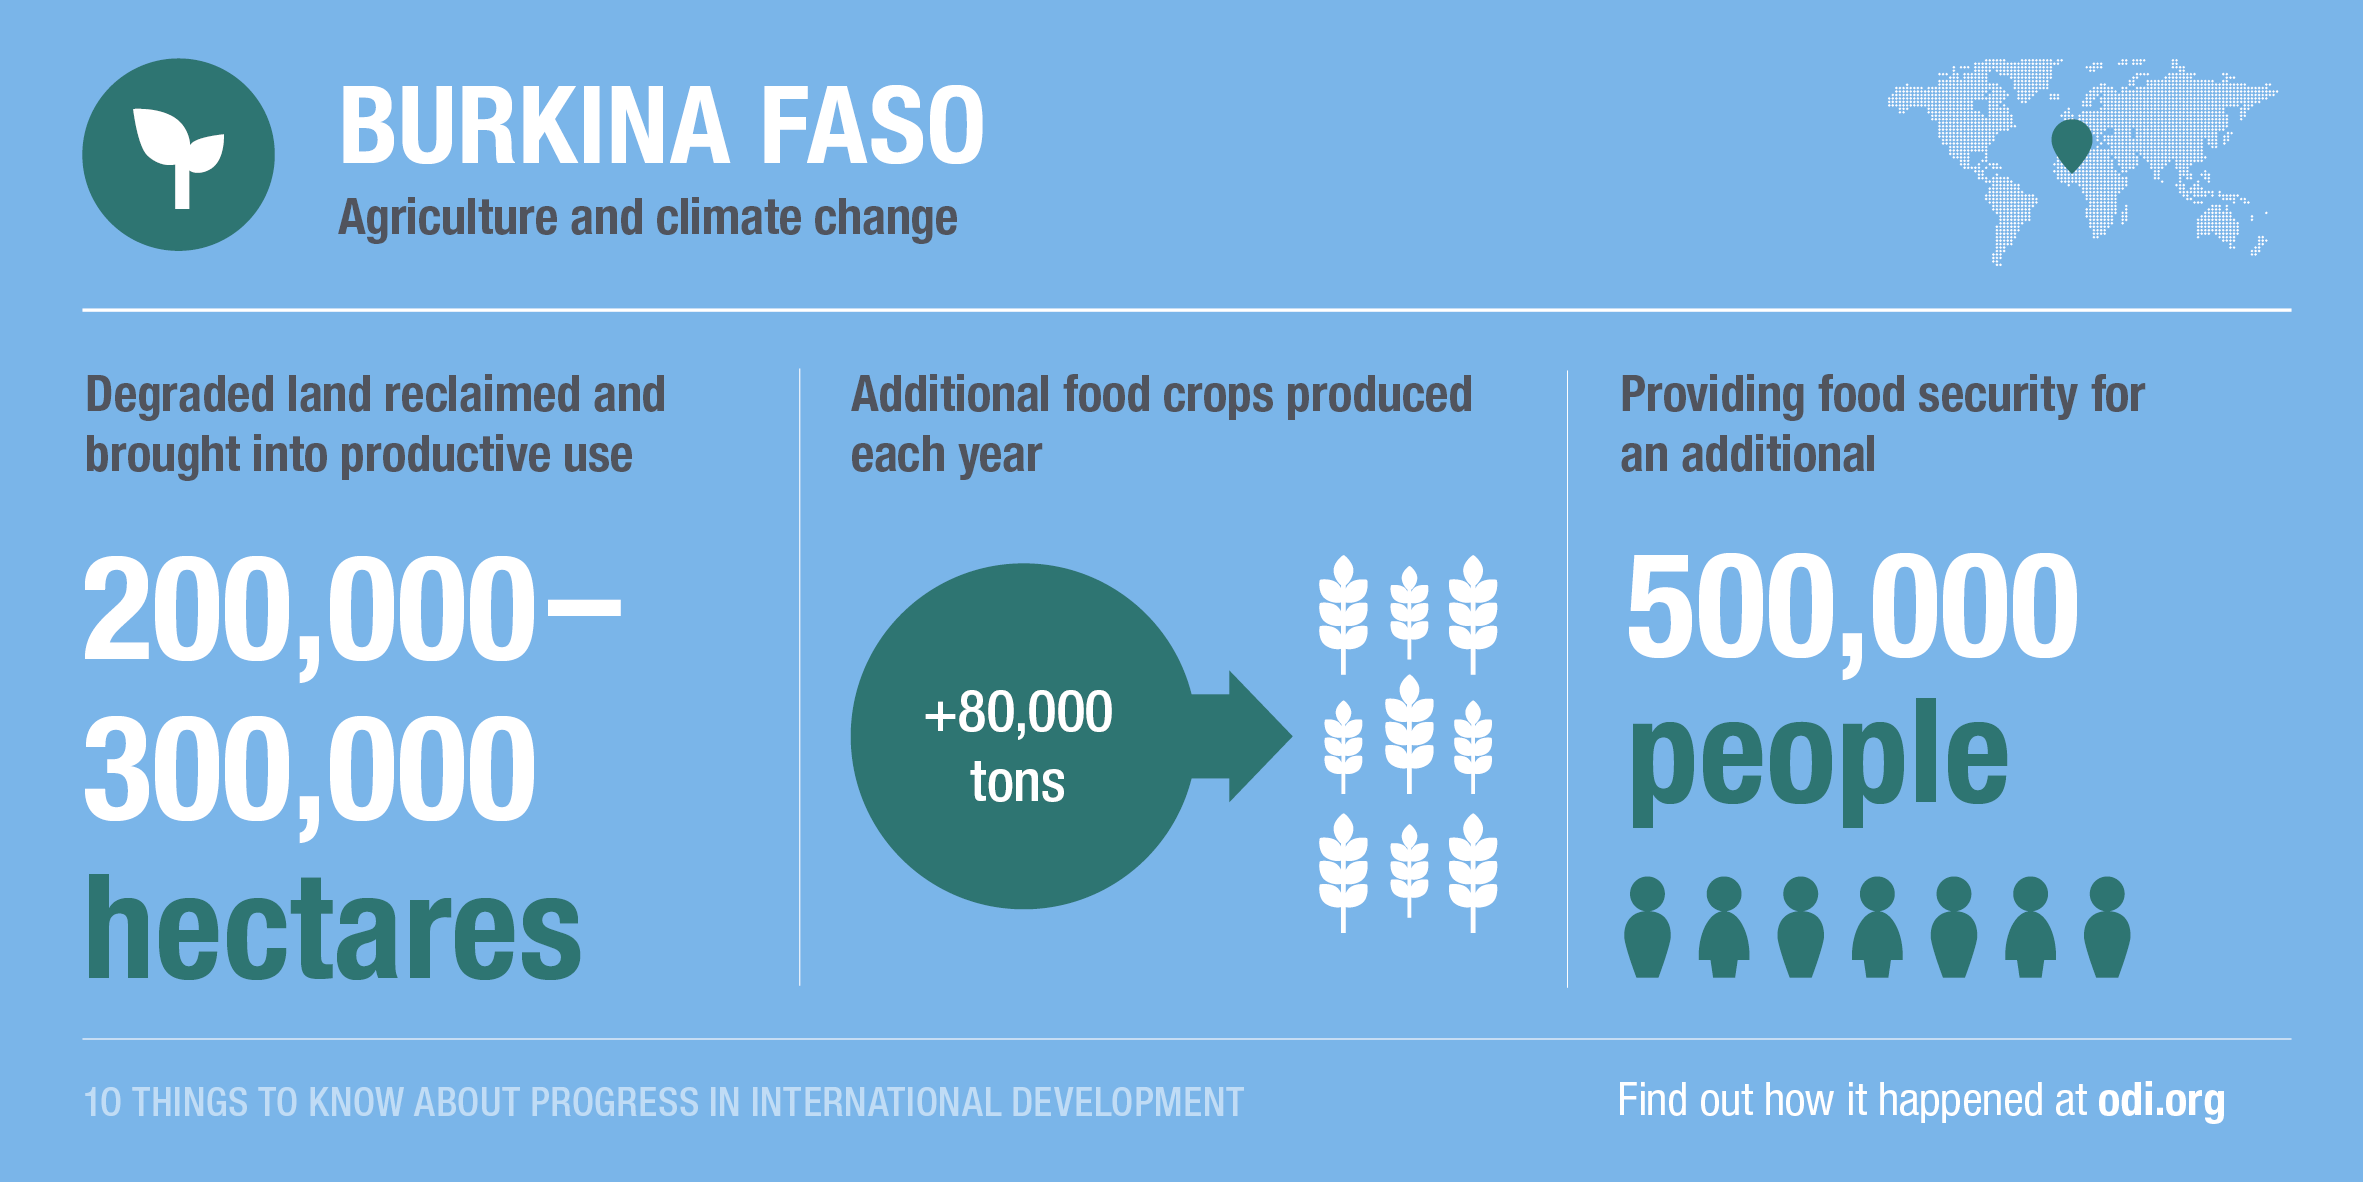 Burkina Faso's progress on agriculture